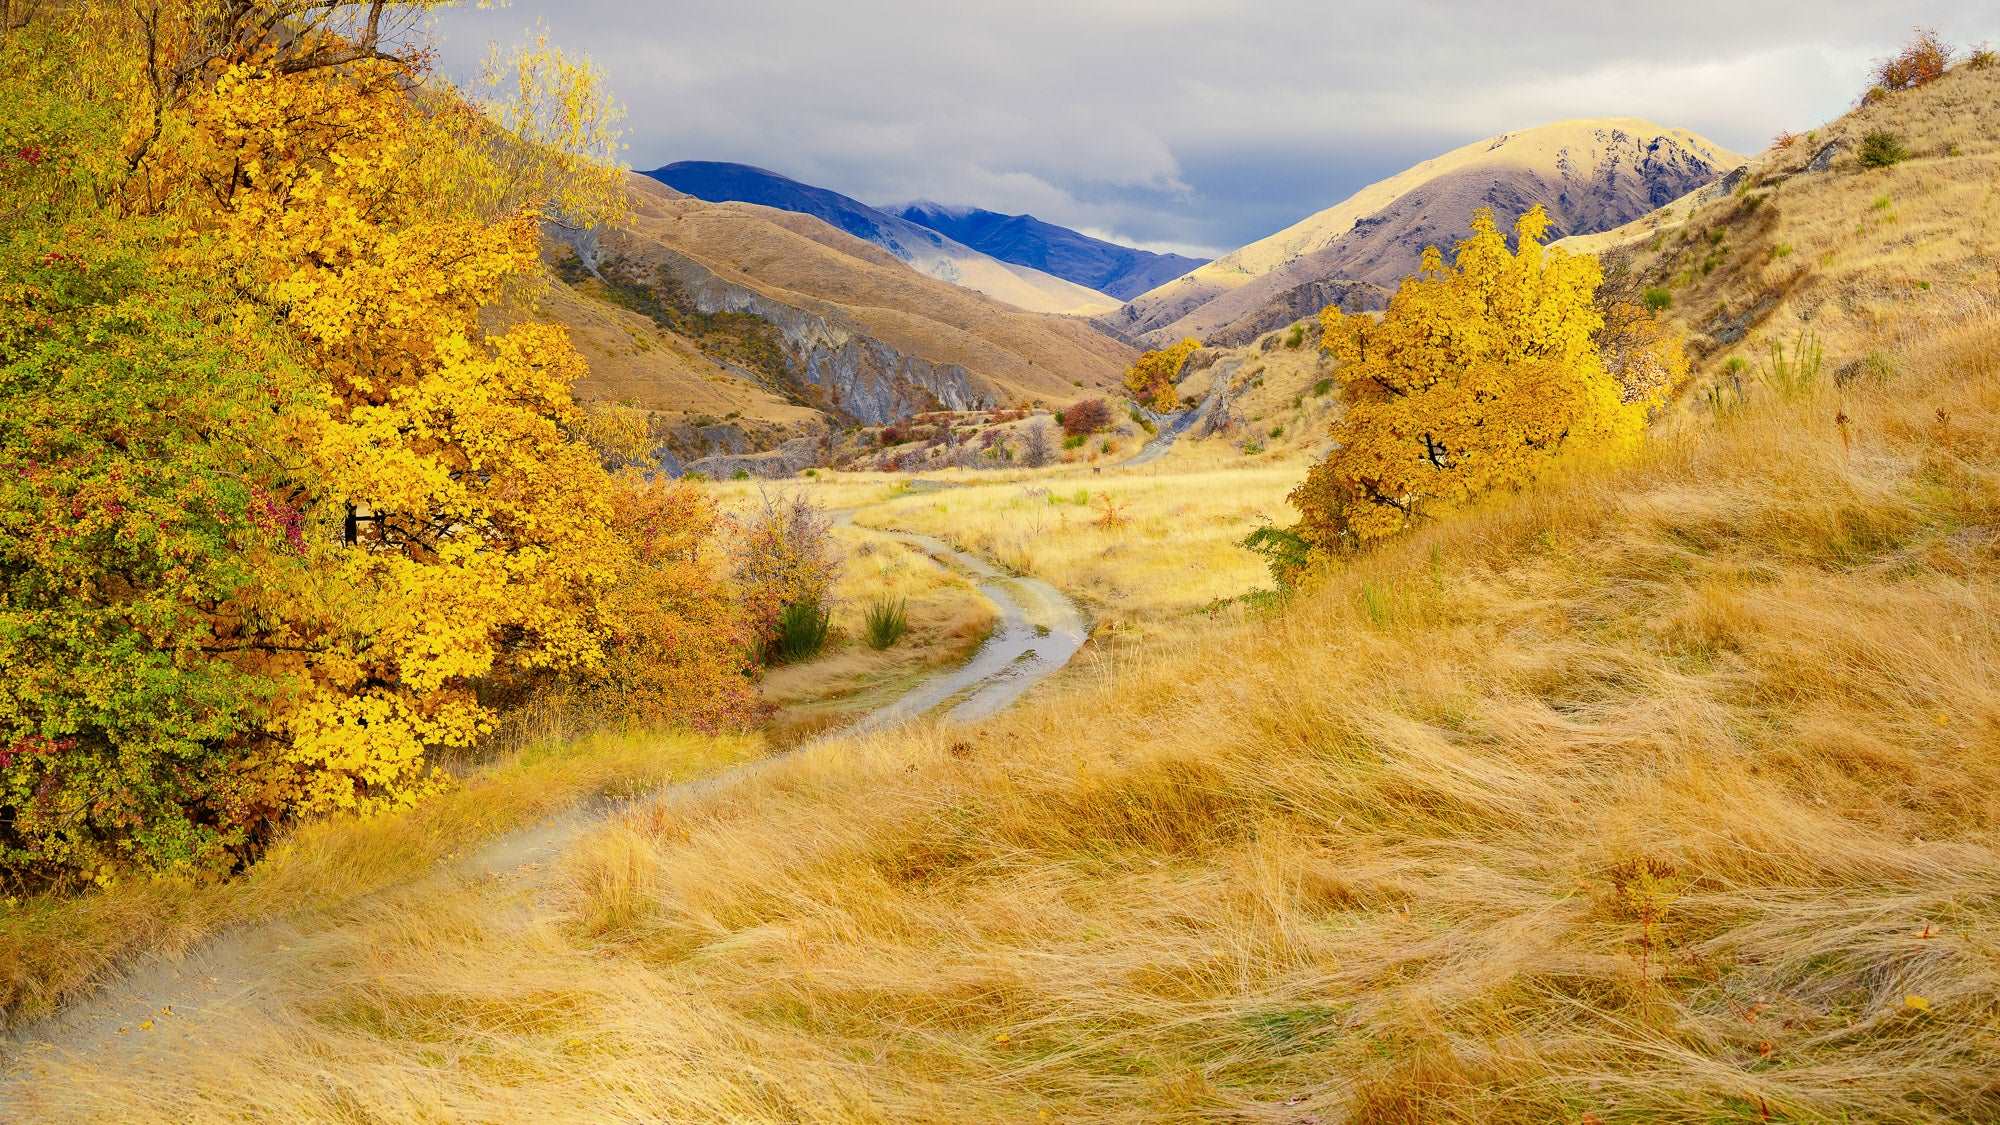 Gold Road - Macetown - by Award Winning New Zealand Landscape Photographer Stephen Milner